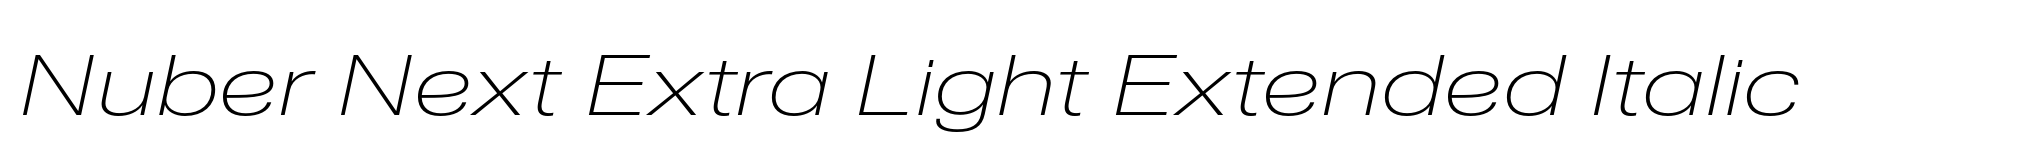 Nuber Next Extra Light Extended Italic image